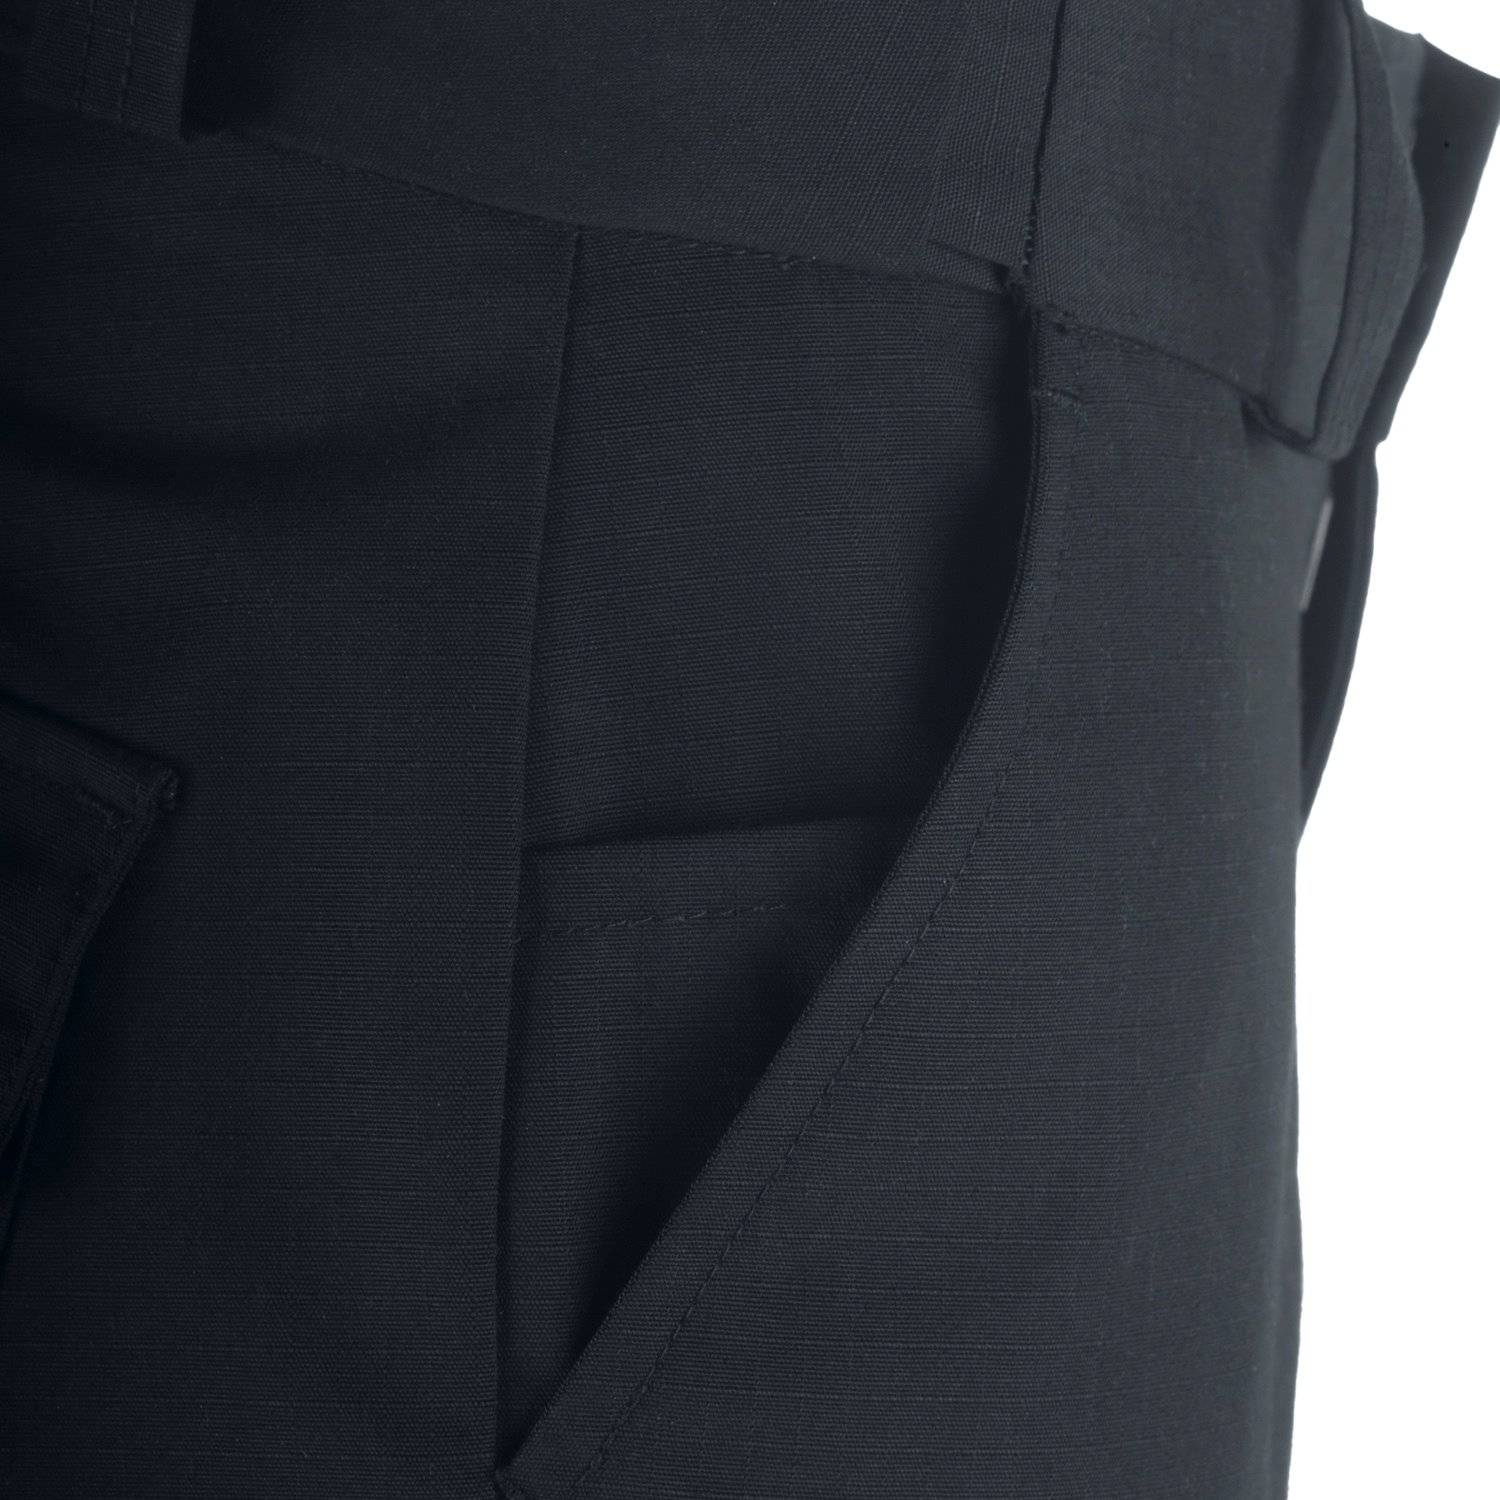 Galls Pro Women's EMS Trousers | EMS Pants